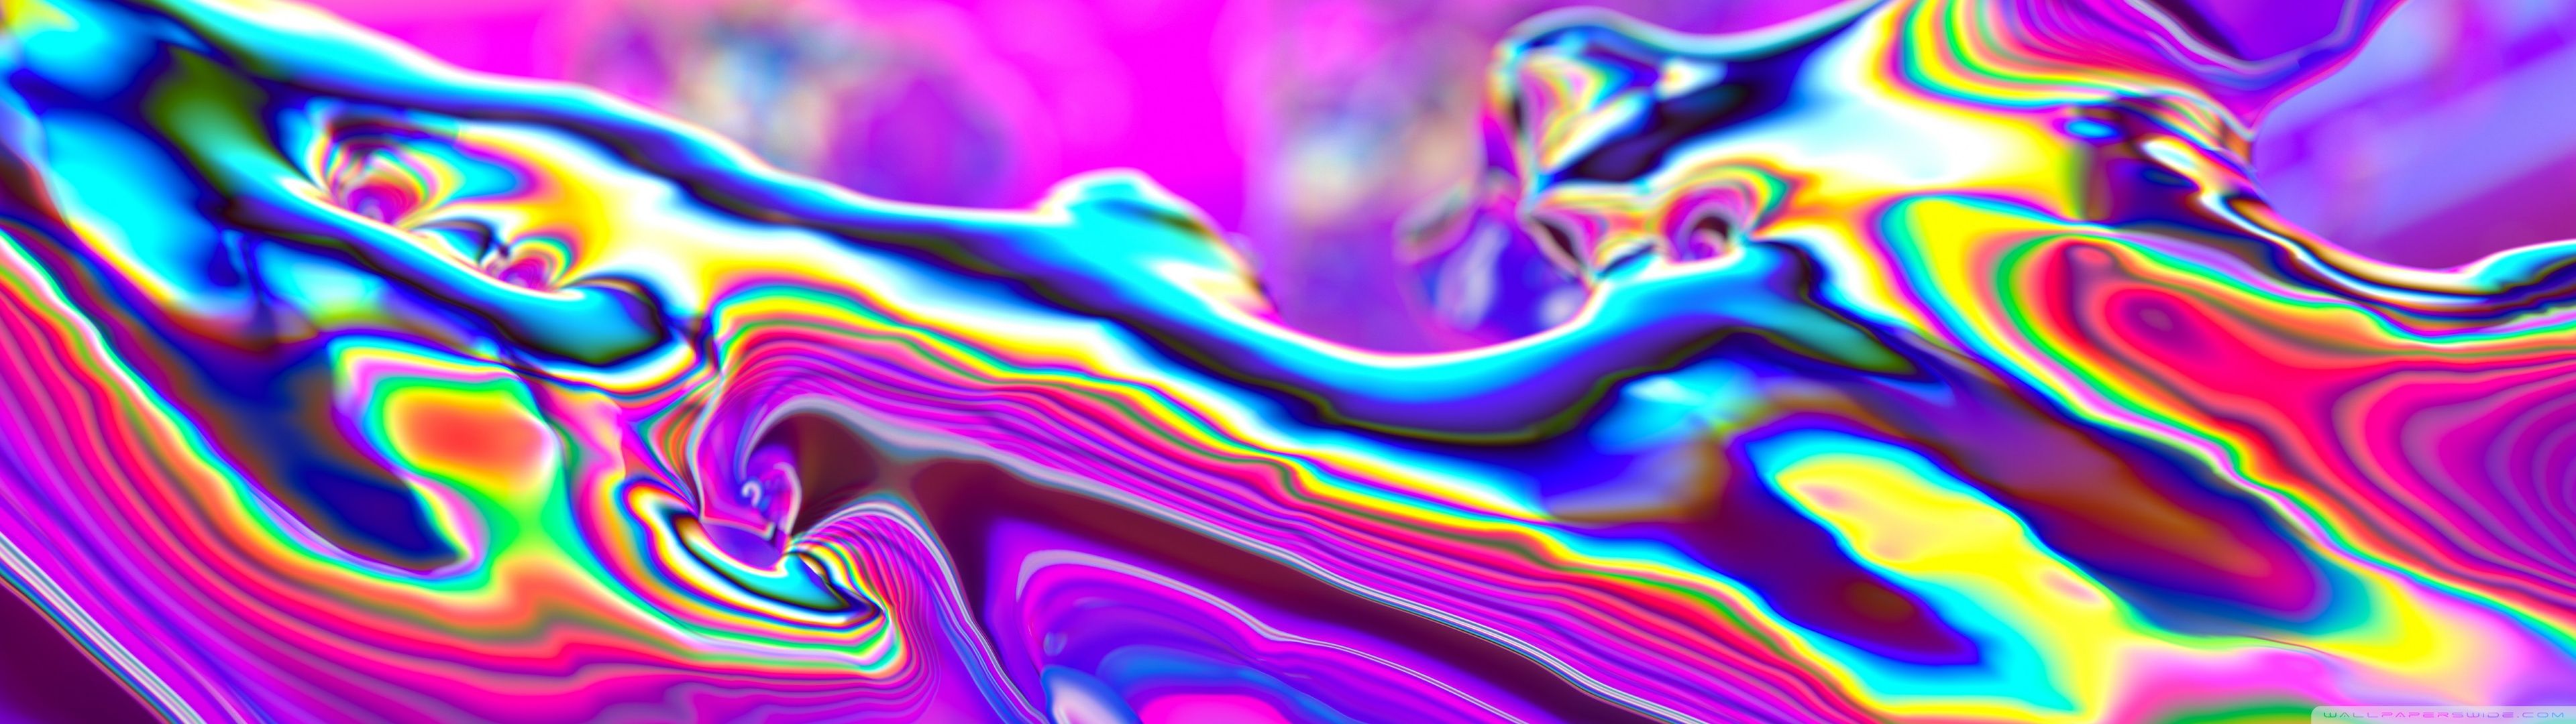 Abstract Iridescent Liquid Art Ultra HD Desktop Background Wallpaper for: Multi Display, Dual & Triple Monitor